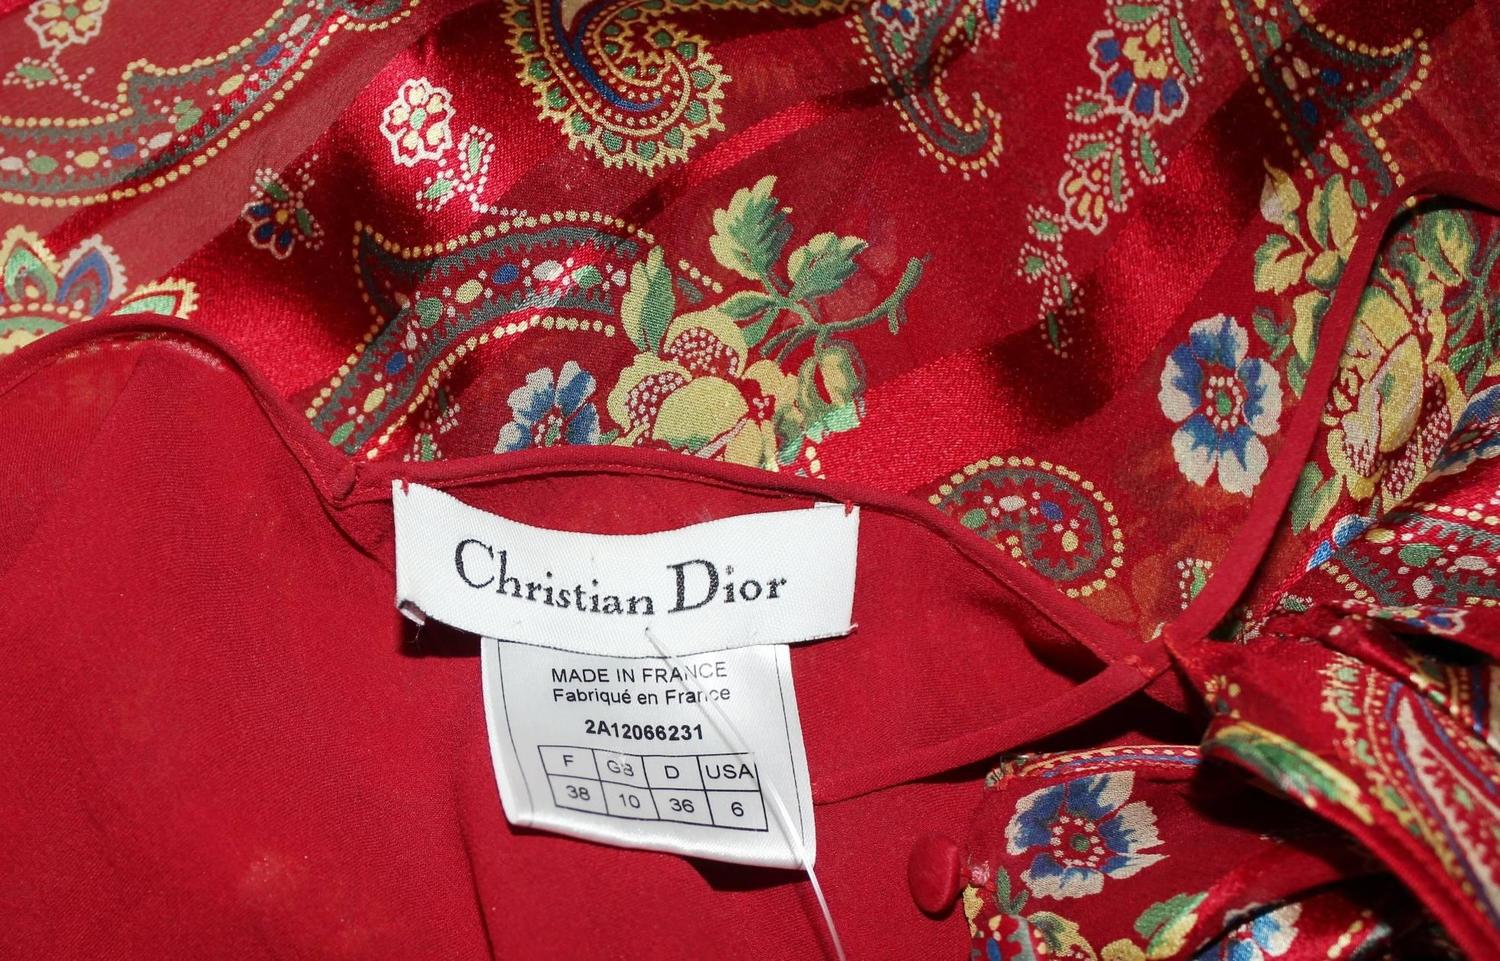 Fantastic Christian Dior Paisley Ruffled Silk Gown Dress at 1stdibs